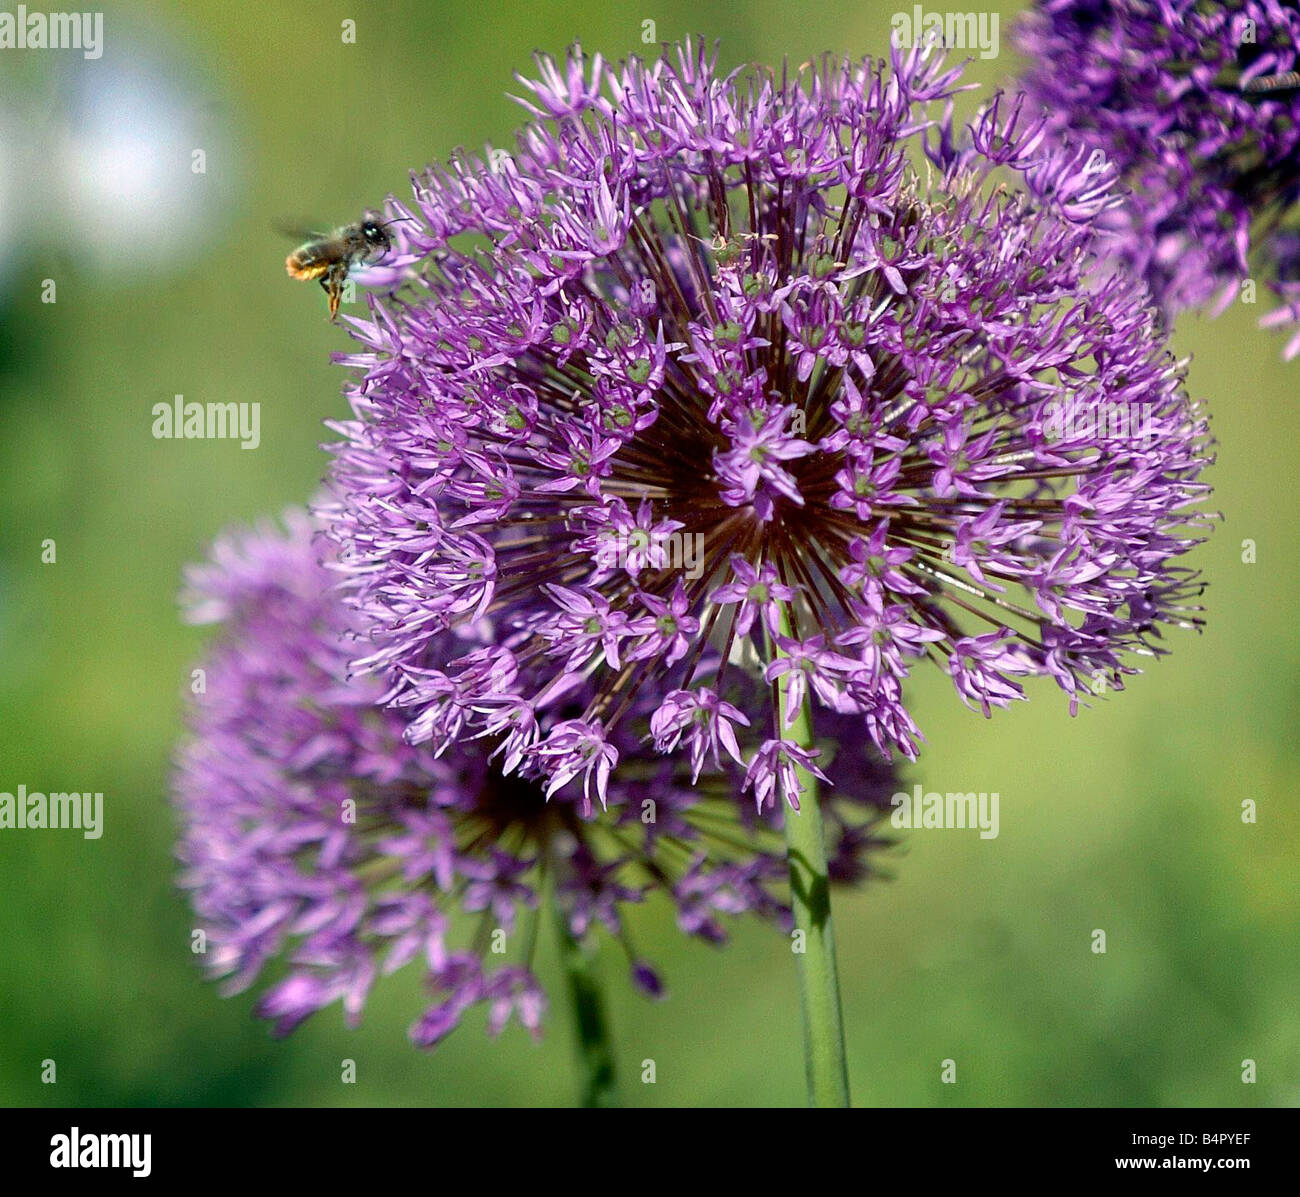 A bunble bee on an alium Stock Photo